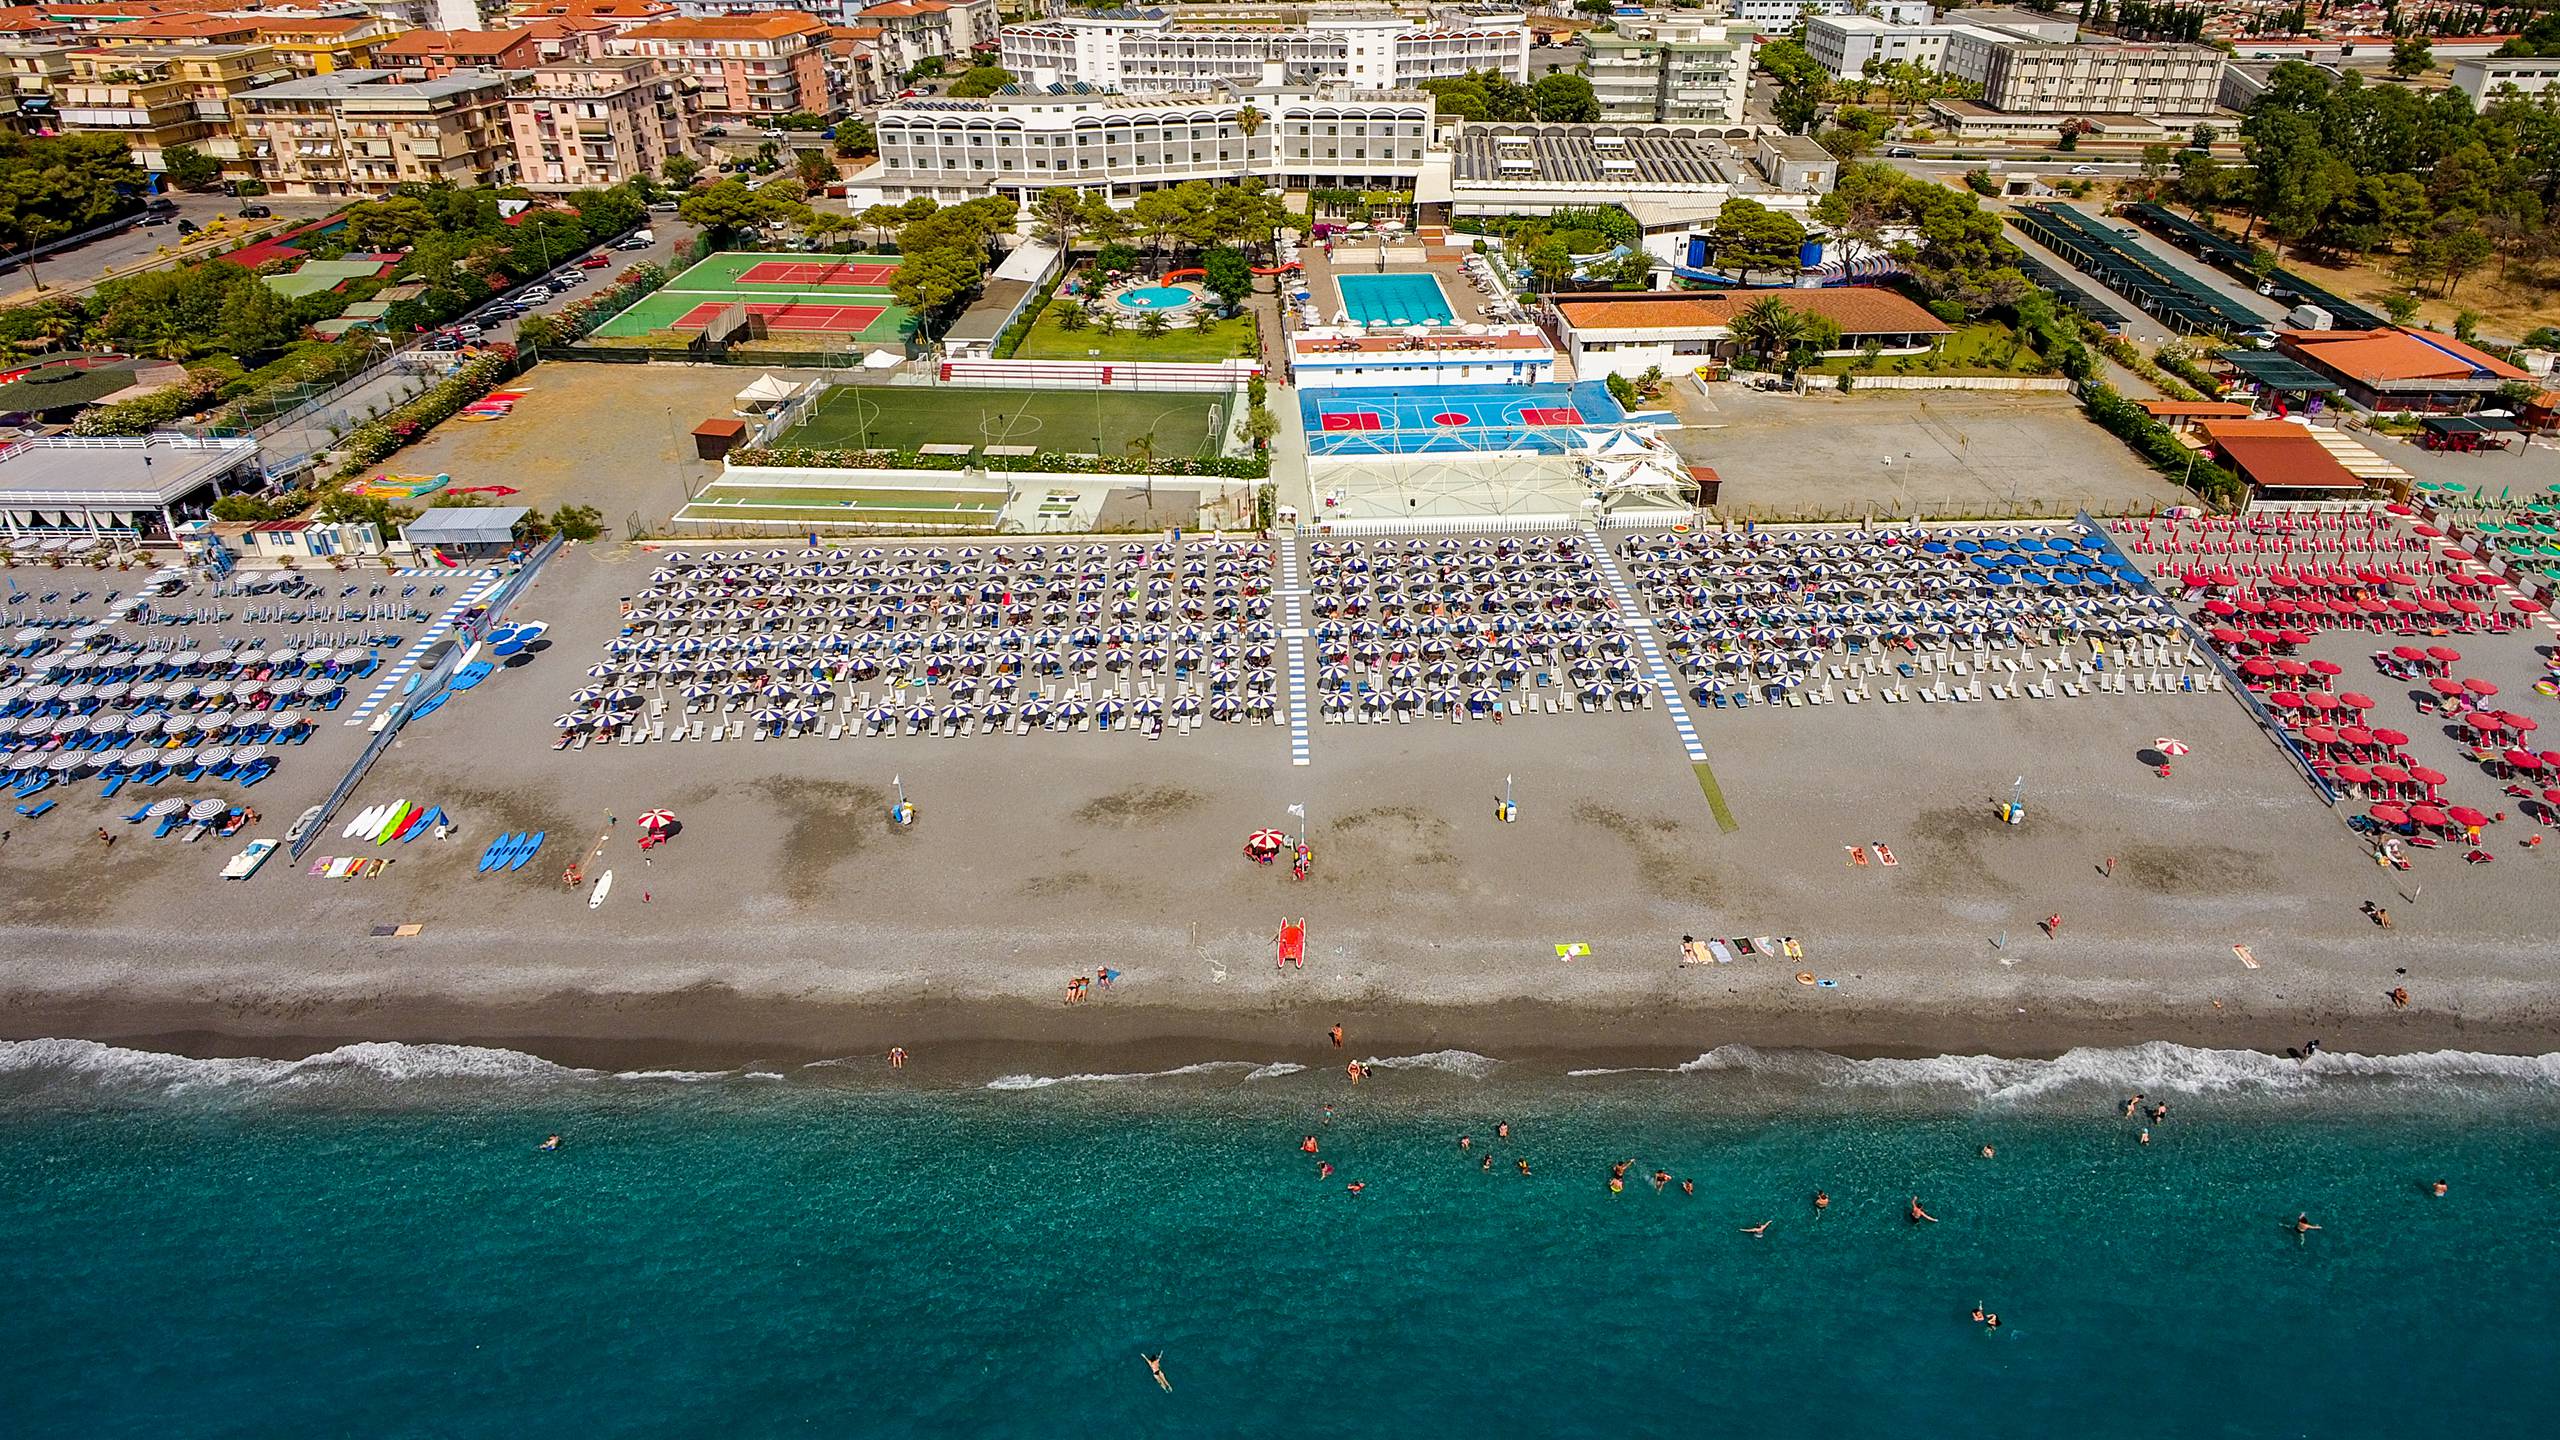 Santa-Caterina-Village-Scalea-village-sea-umbrellas-beach-hotel-4-DJI-0046